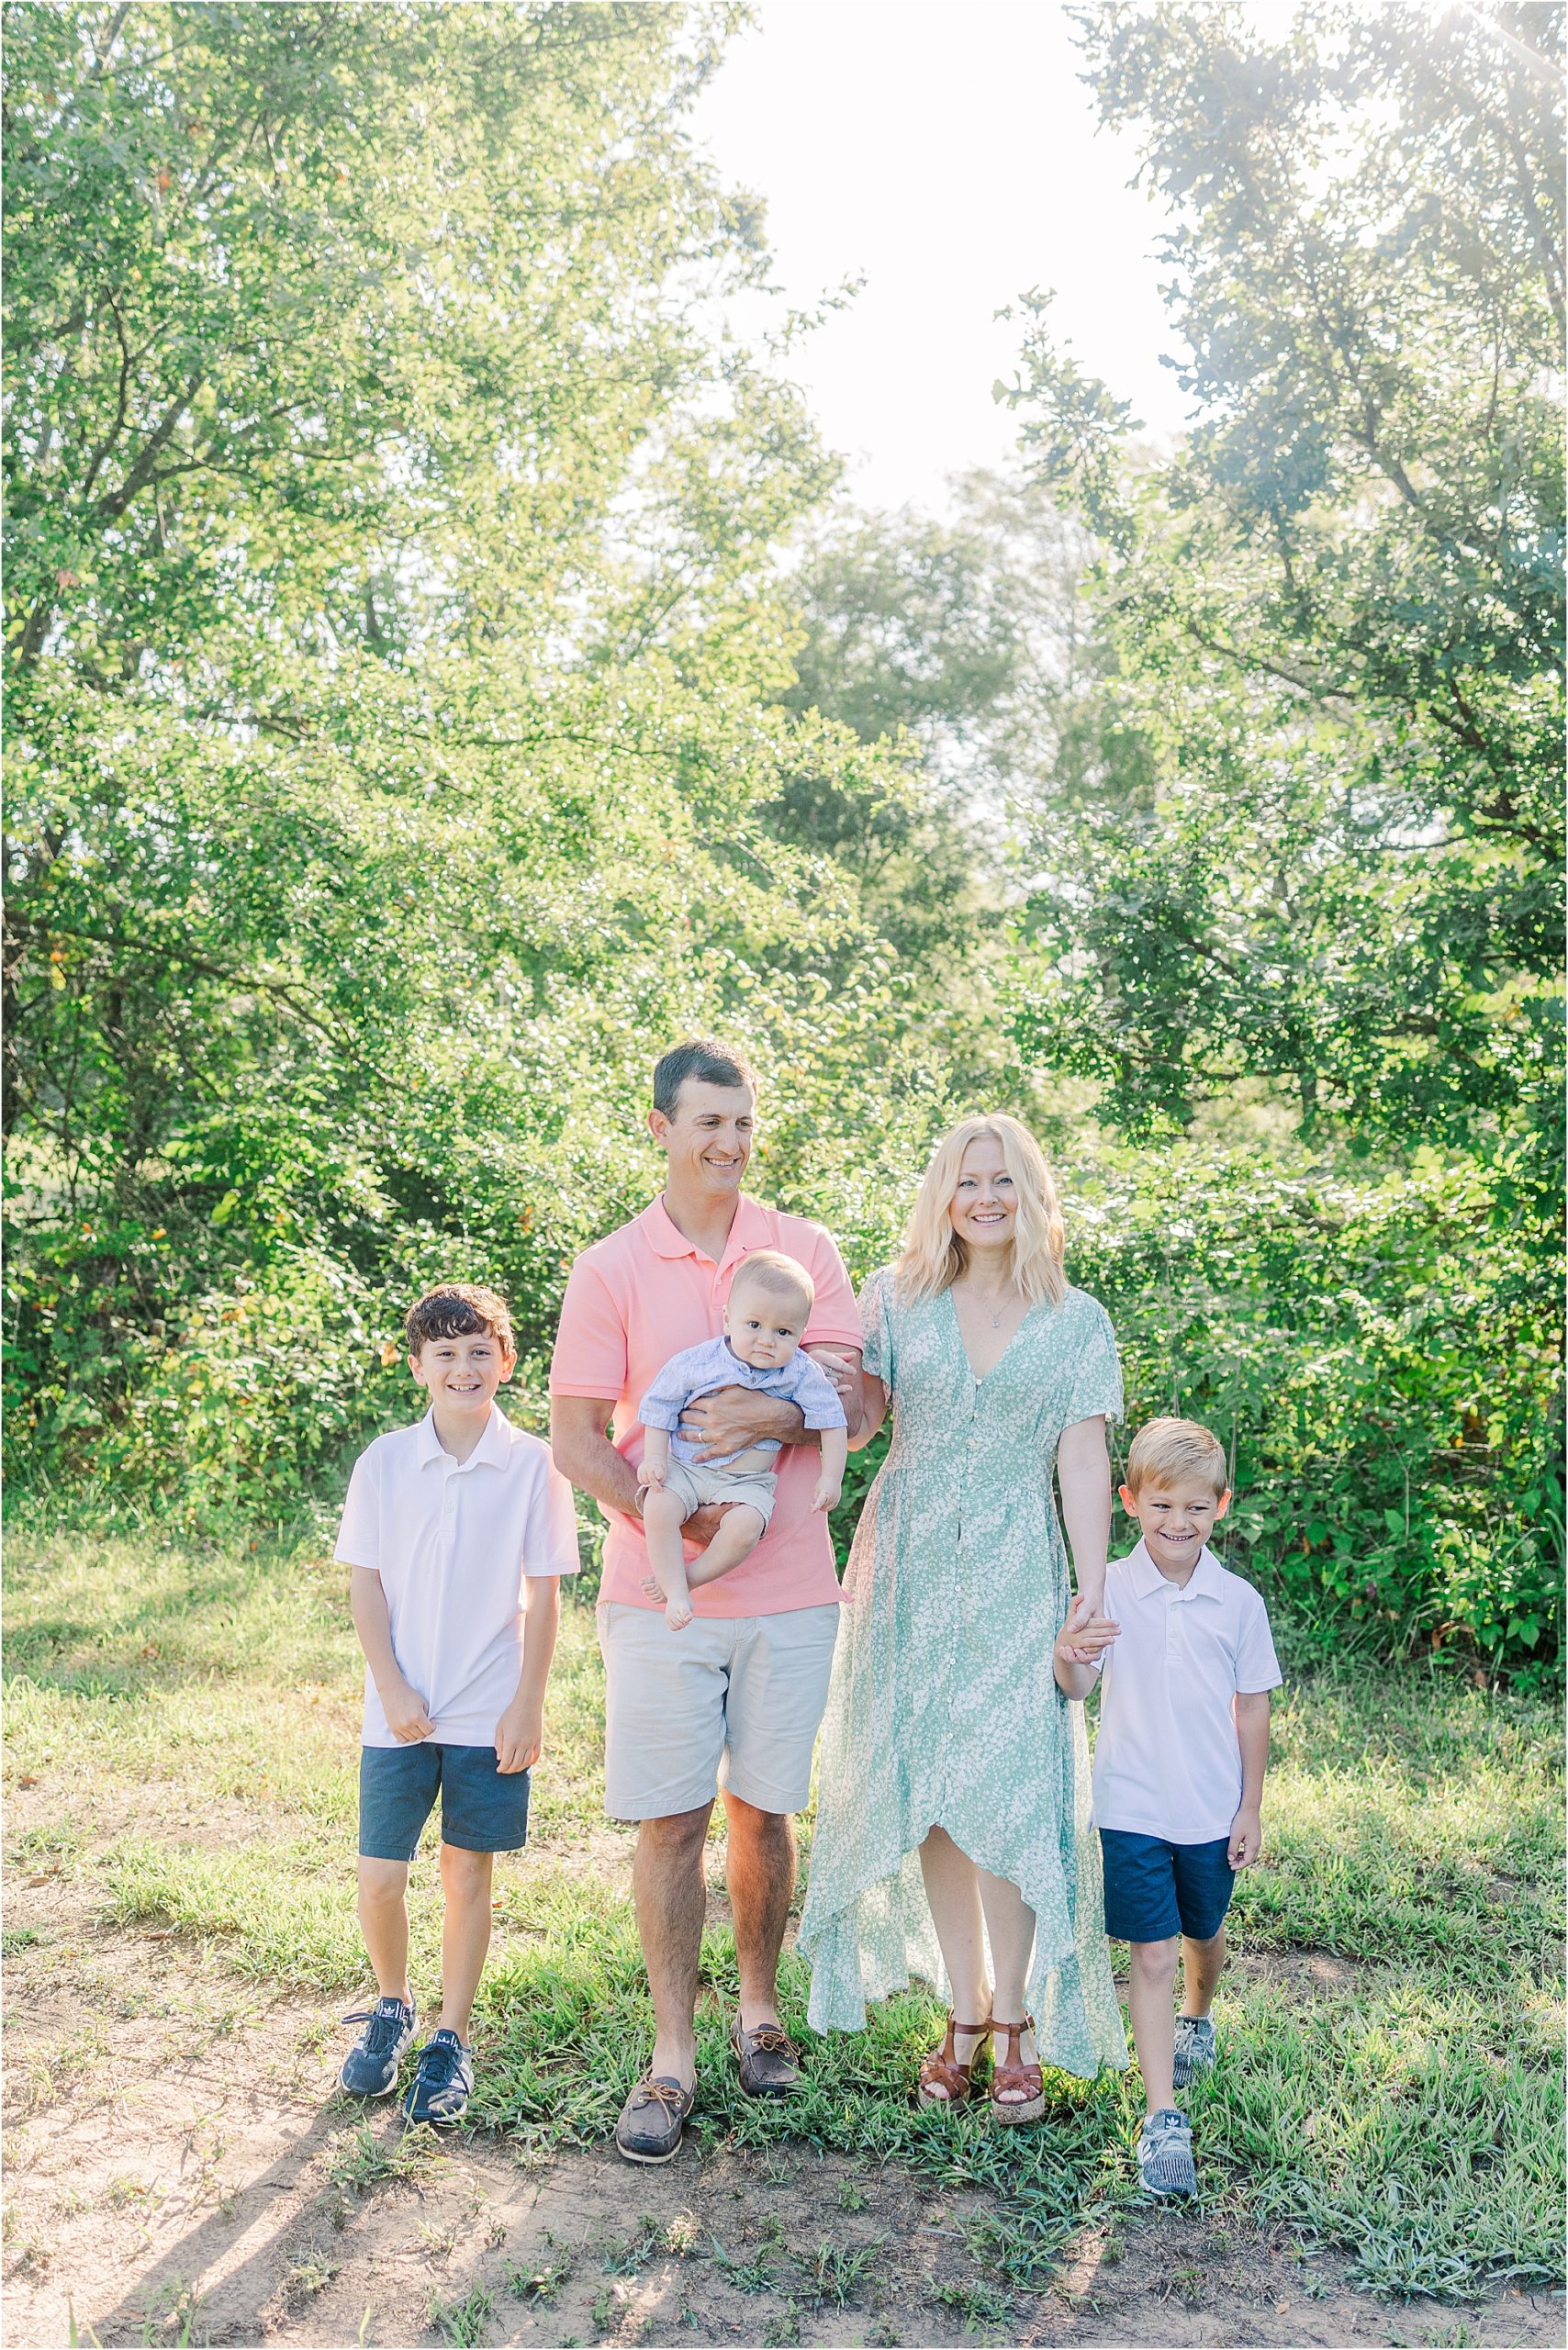 Rural Missouri Family Session | milestone photos | Cottrill Family | Kelsey Alumbaugh Photography | #familyphotos #familysession #kcfamilyphotos